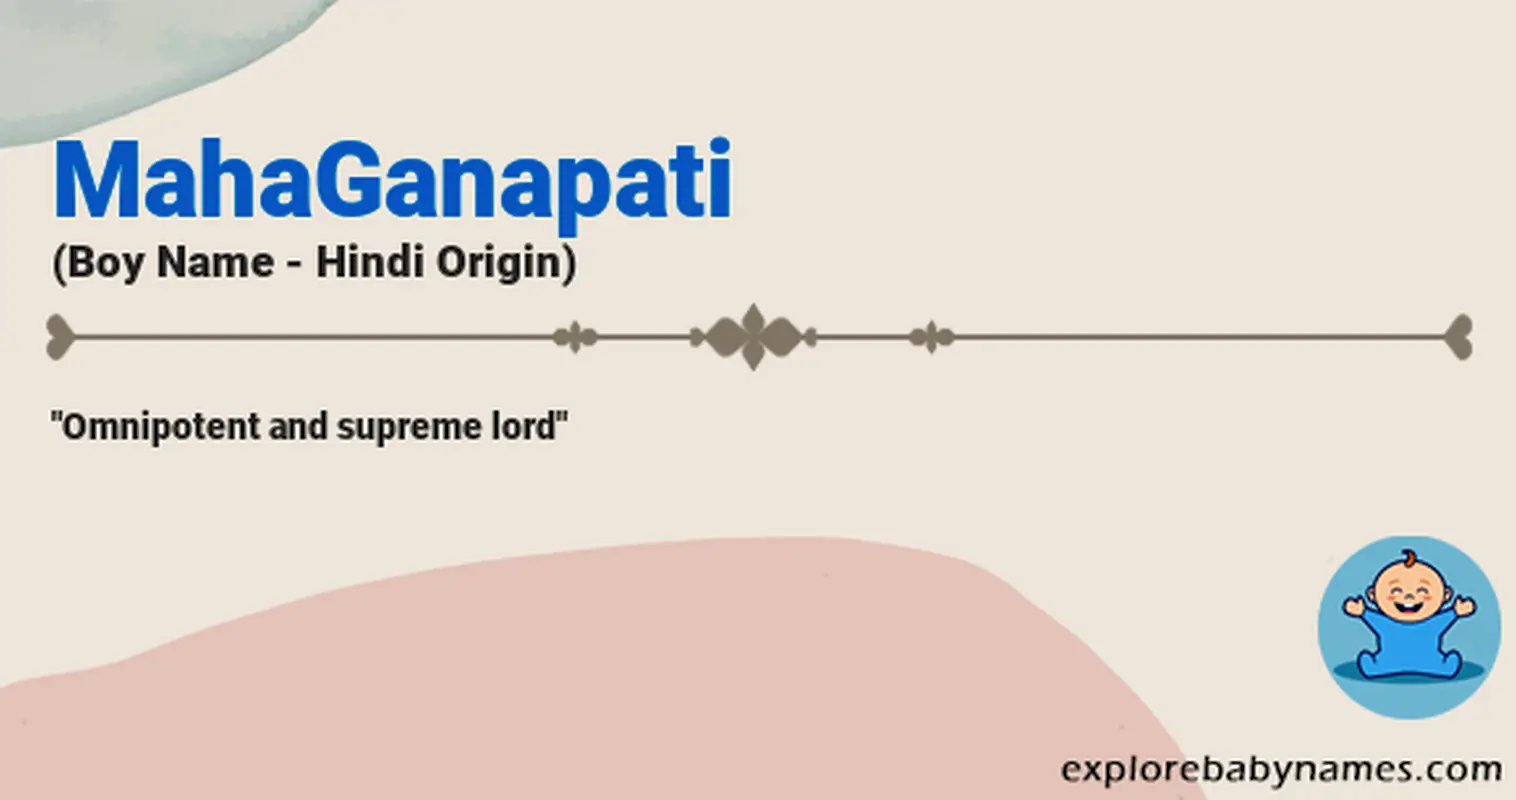 Meaning of MahaGanapati